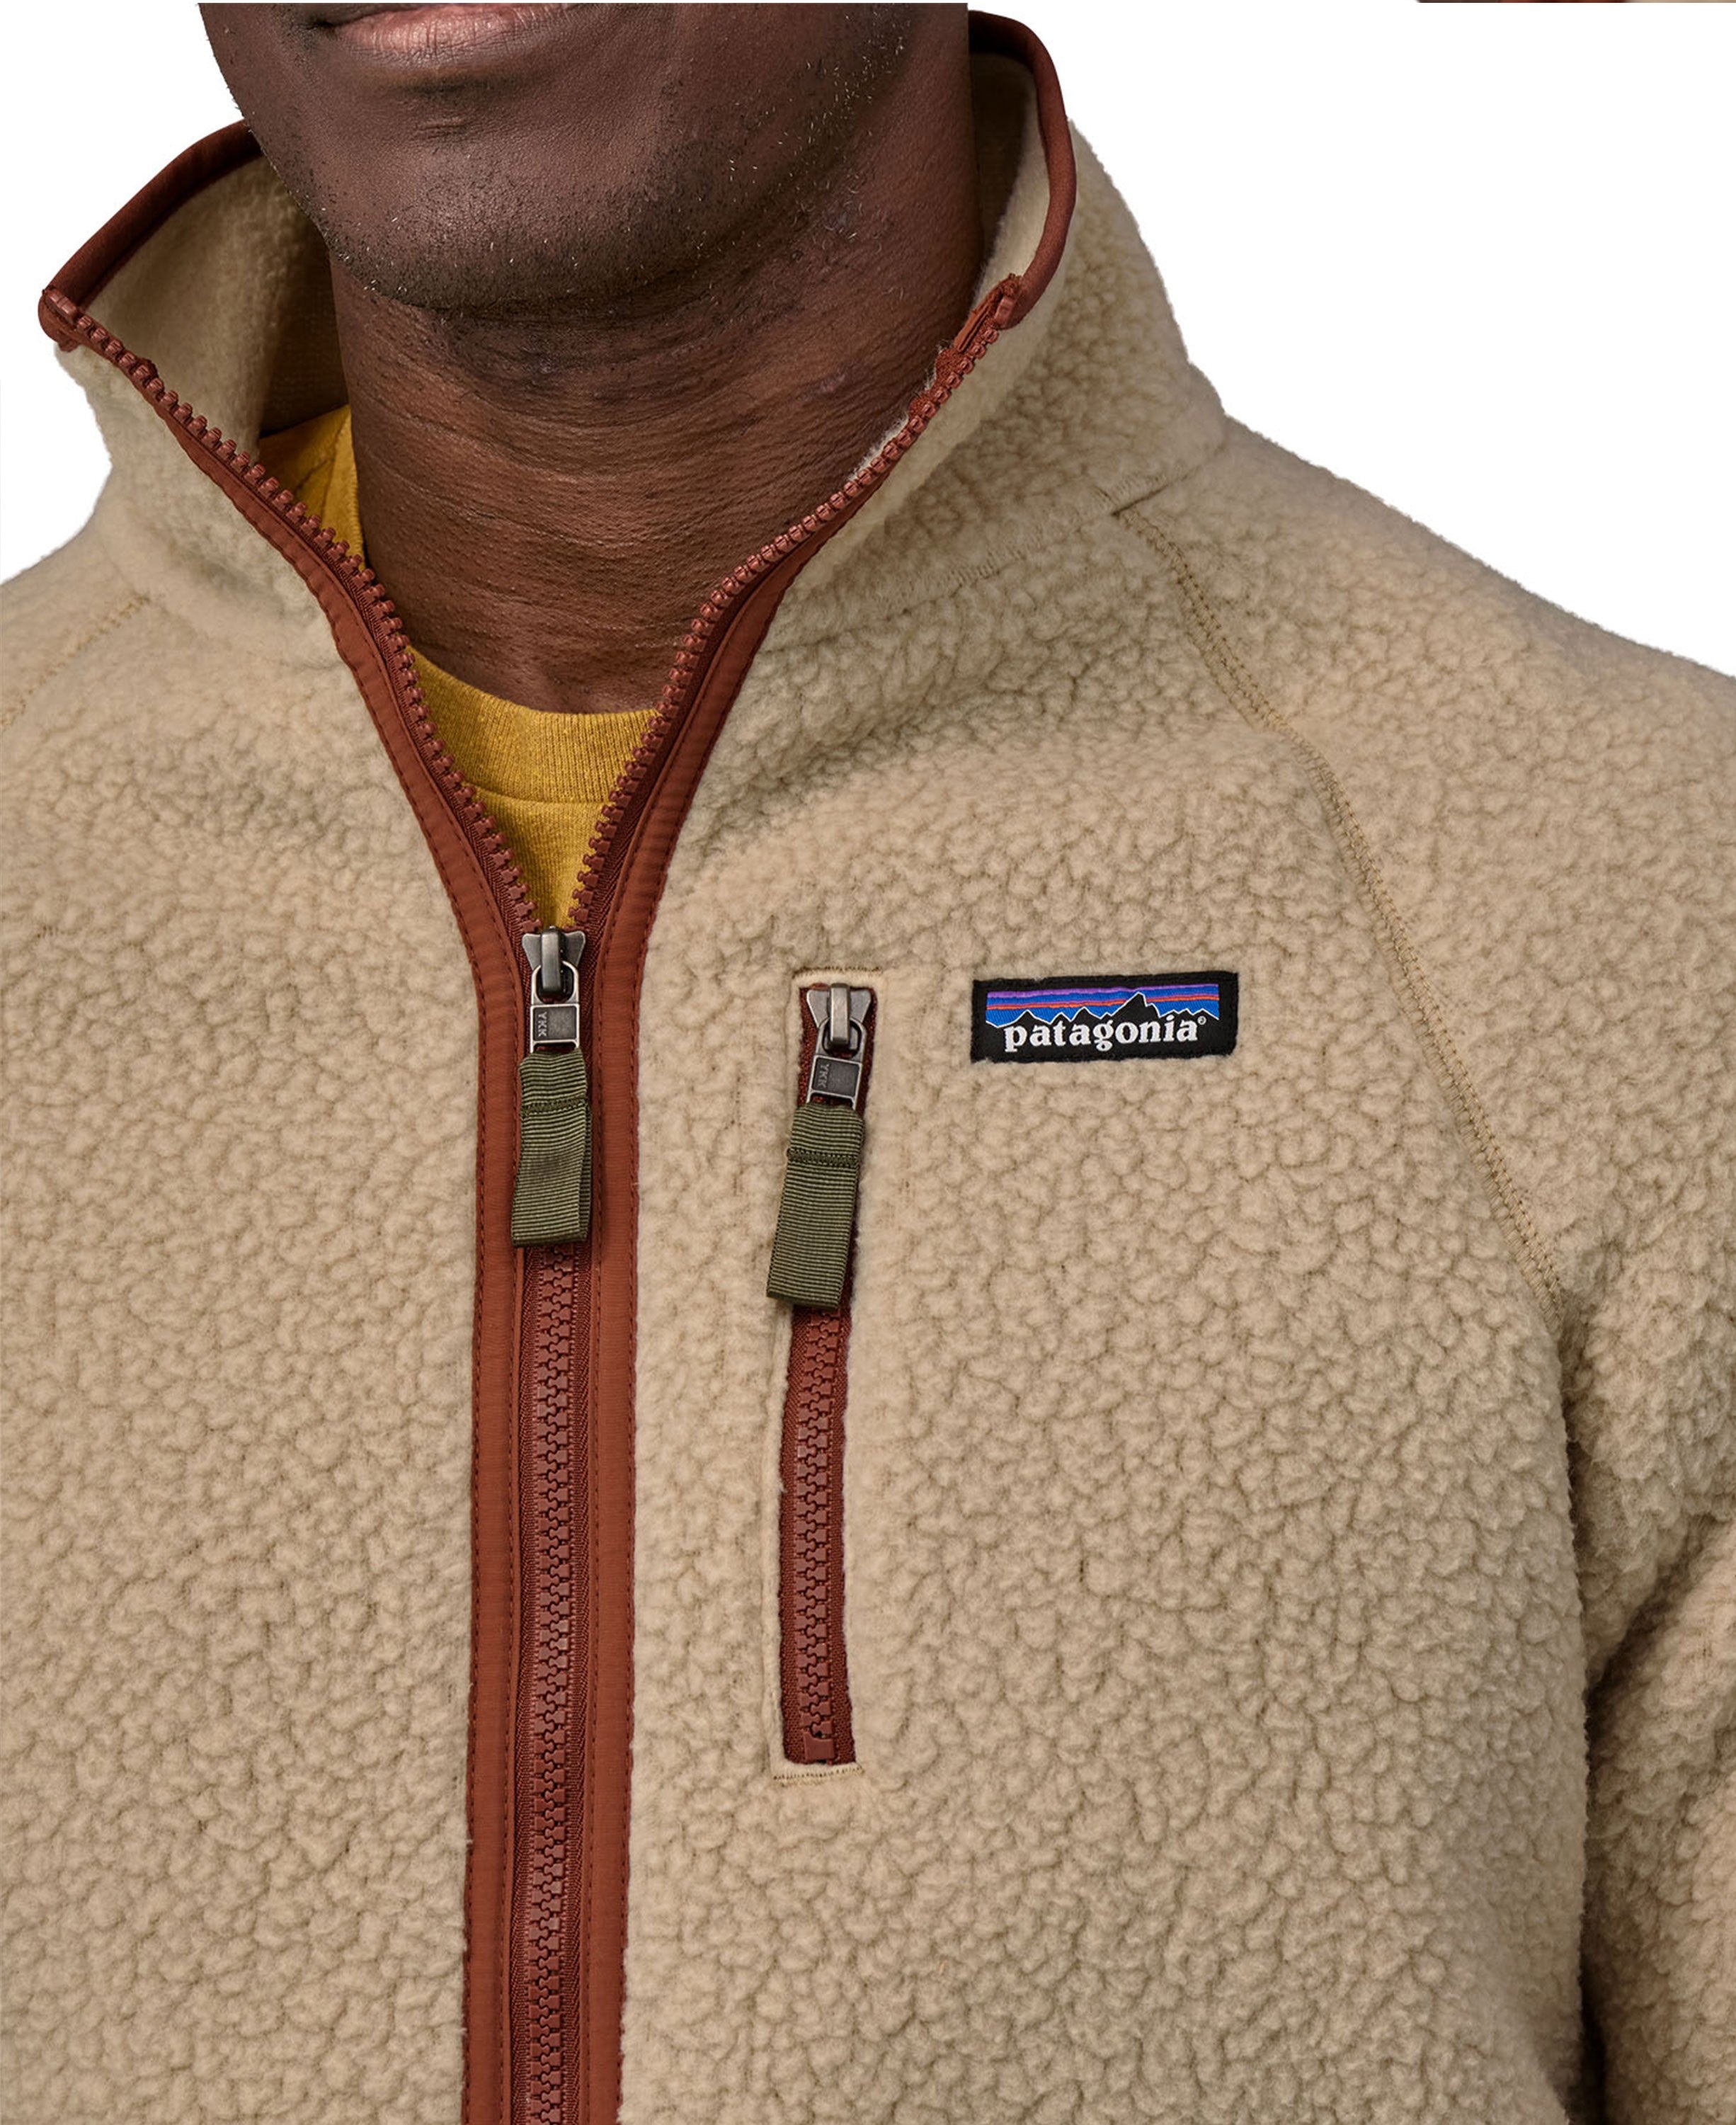 Retro Pile Fleece Jacket - El Cap Khaki w/Sisu Brown